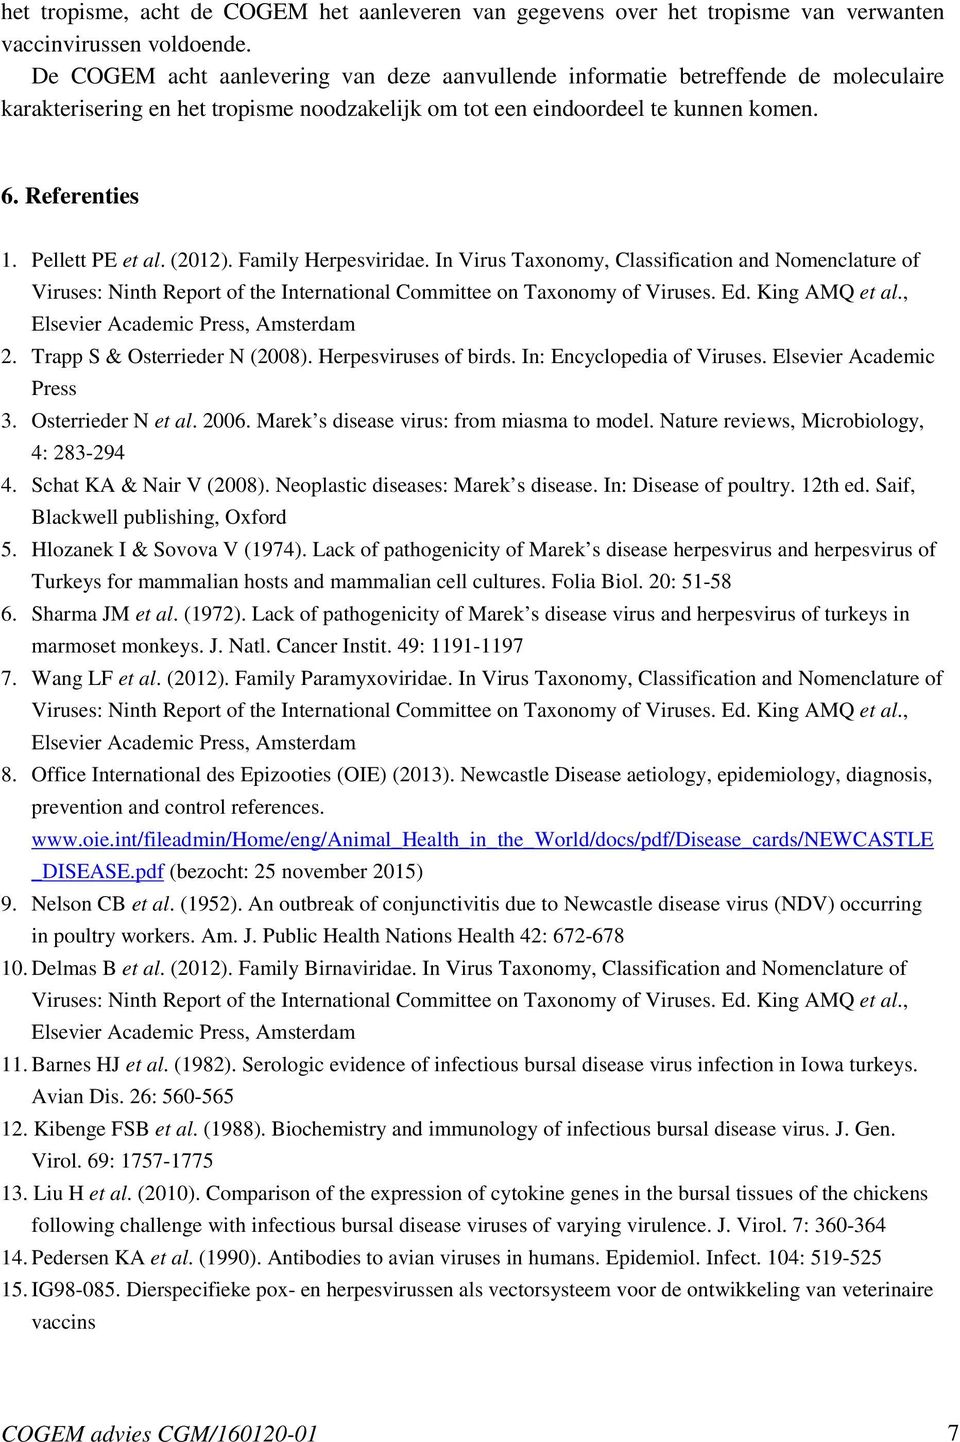 Pellett PE et al. (2012). Family Herpesviridae. In Virus Taxonomy, Classification and Nomenclature of Viruses: Ninth Report of the International Committee on Taxonomy of Viruses. Ed. King AMQ et al.